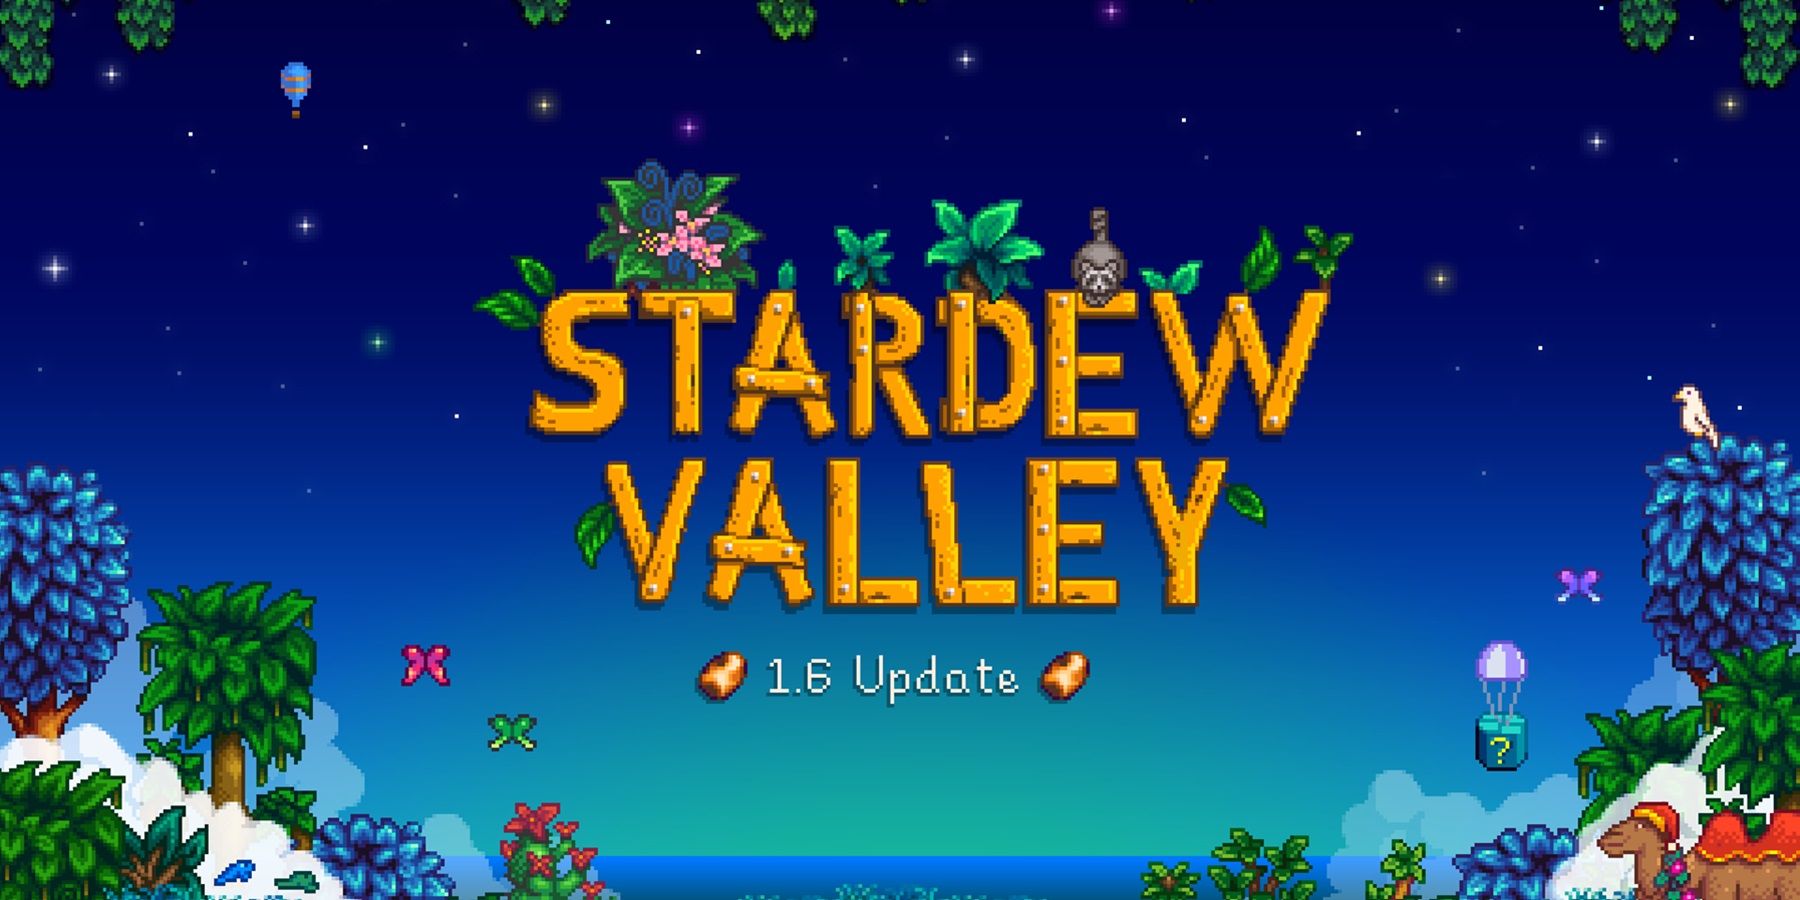 stardew valley update 1-6 patch notes